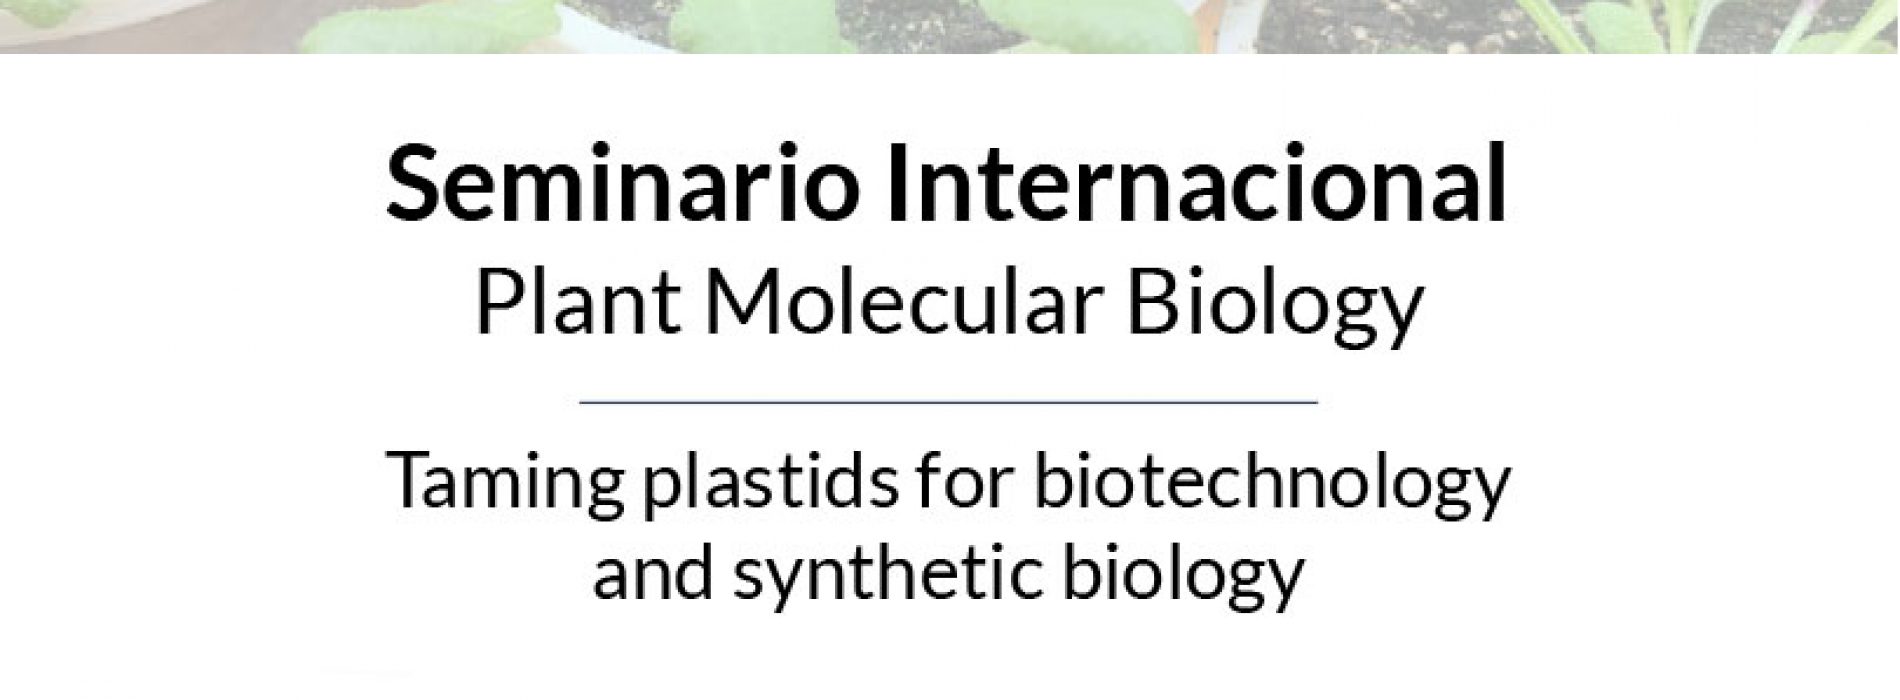 International Seminar Plant Molecular Biology